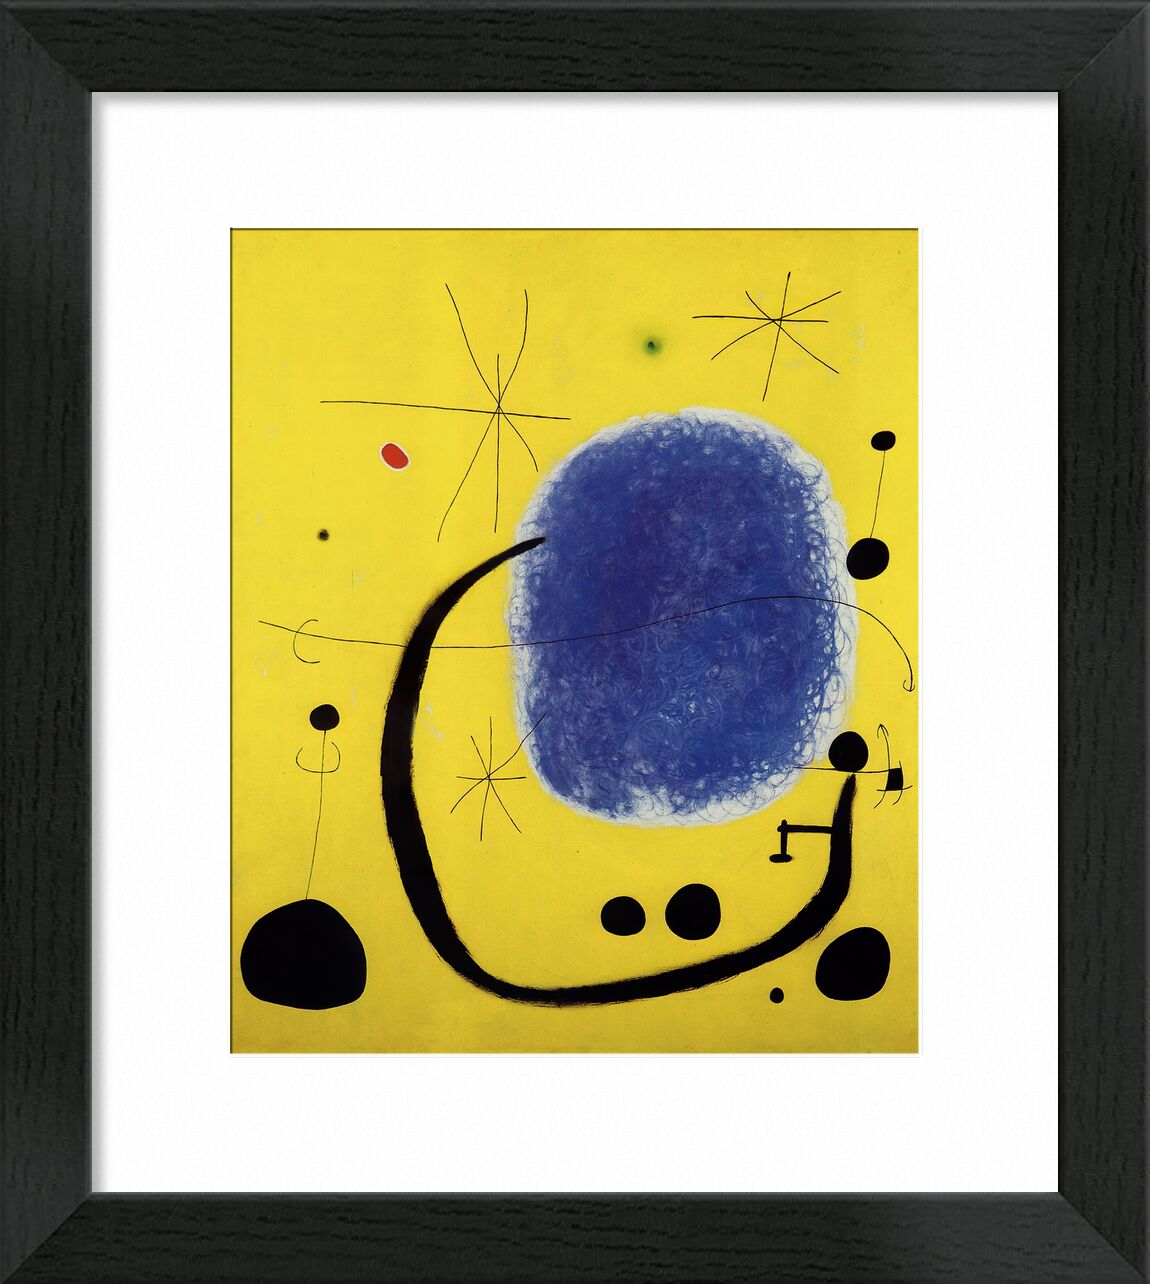 The Gold of the Azure, 1967 - Joan Miró desde Bellas artes, Prodi Art, Joan Miró, oro, azul, pintura, abstracto, amarillo, sol